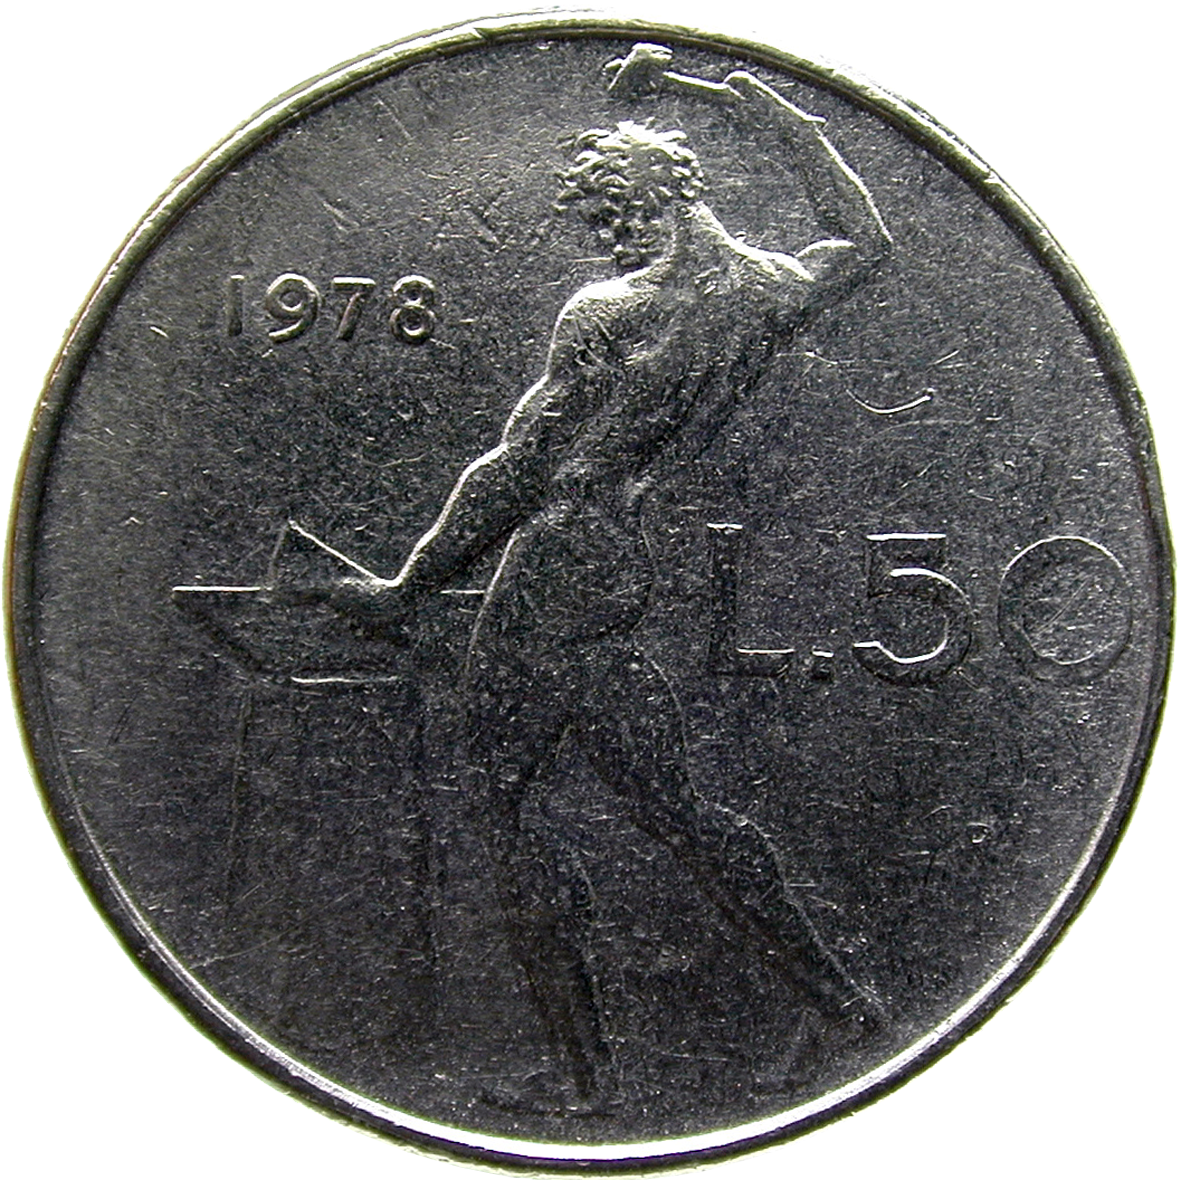 Republic of Italy, 50 Lire 1978 (reverse)